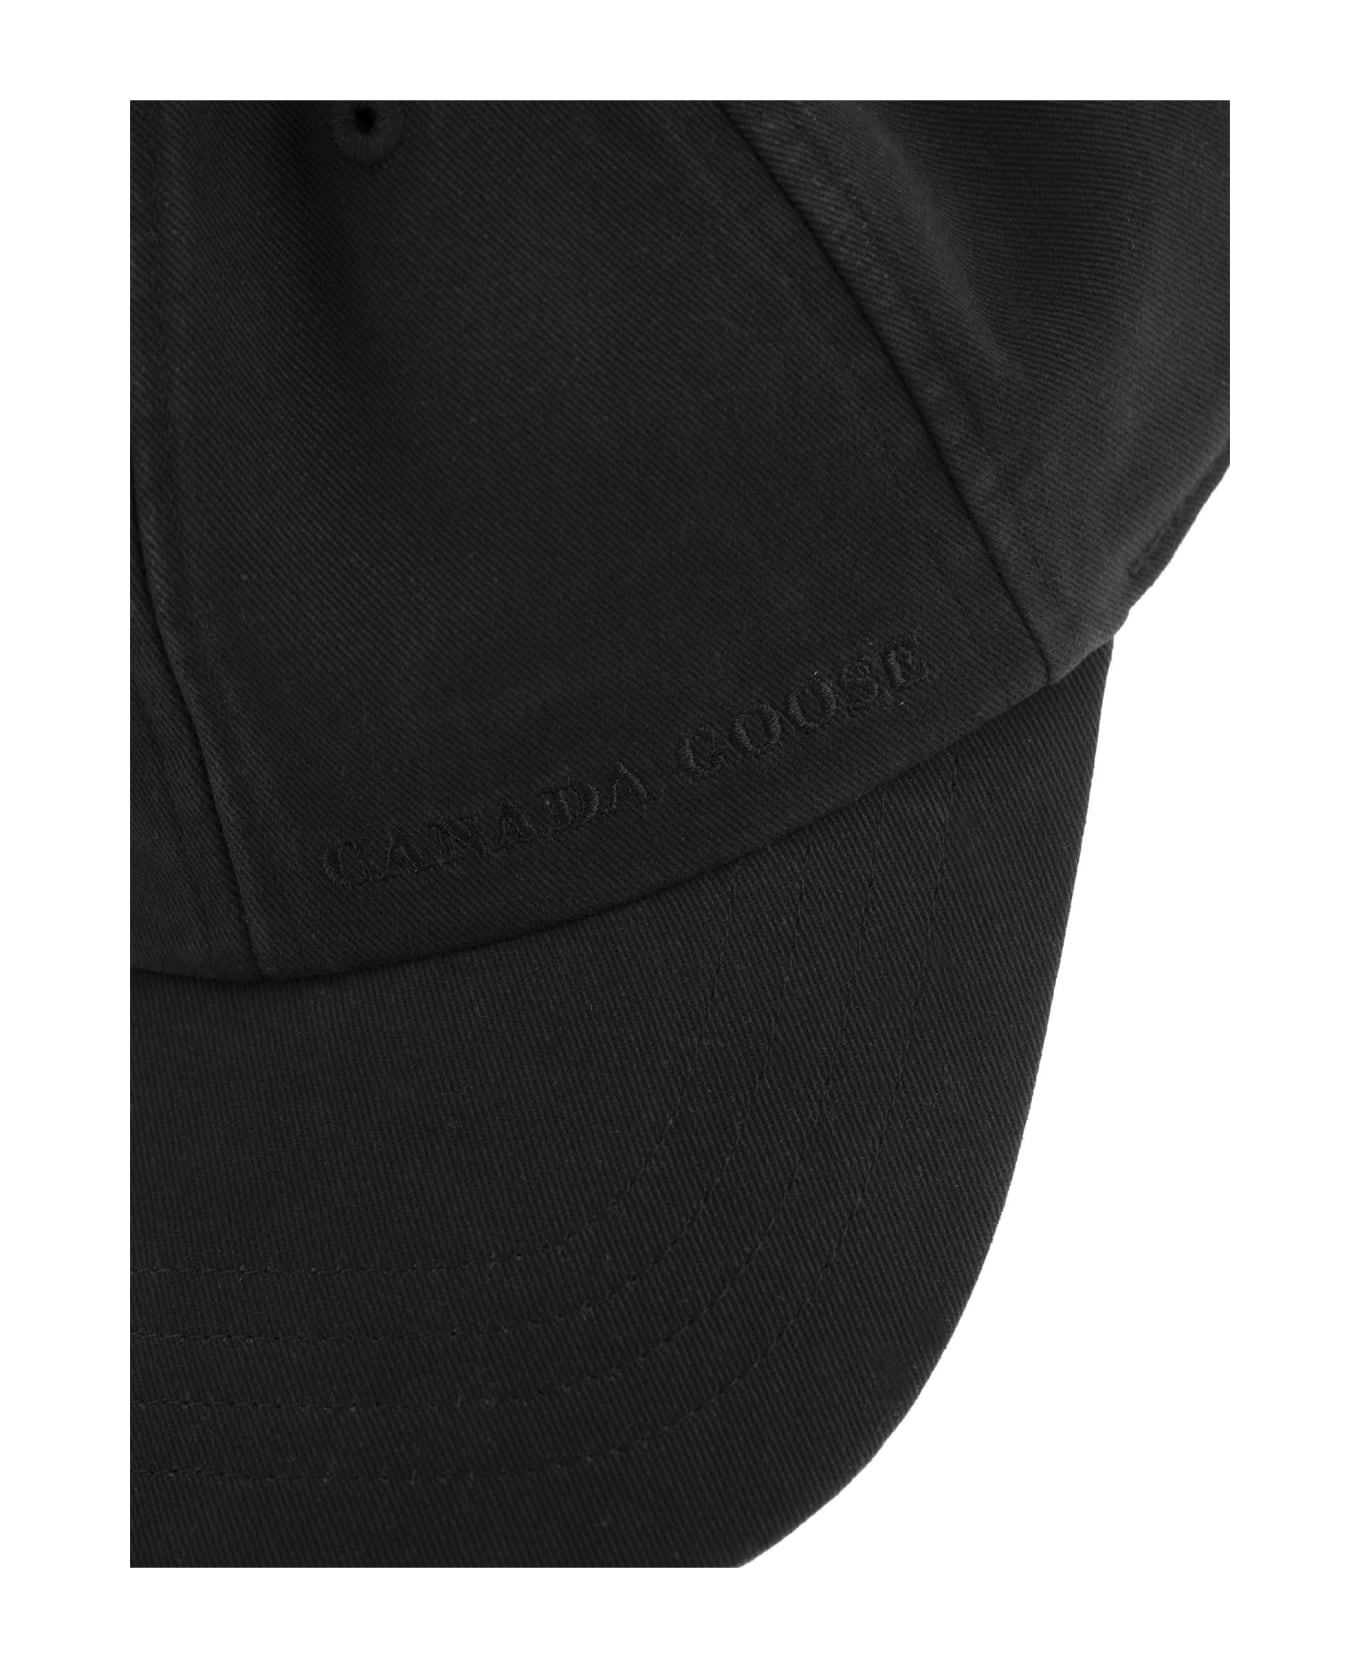 Canada Goose Hat With Visor - Black